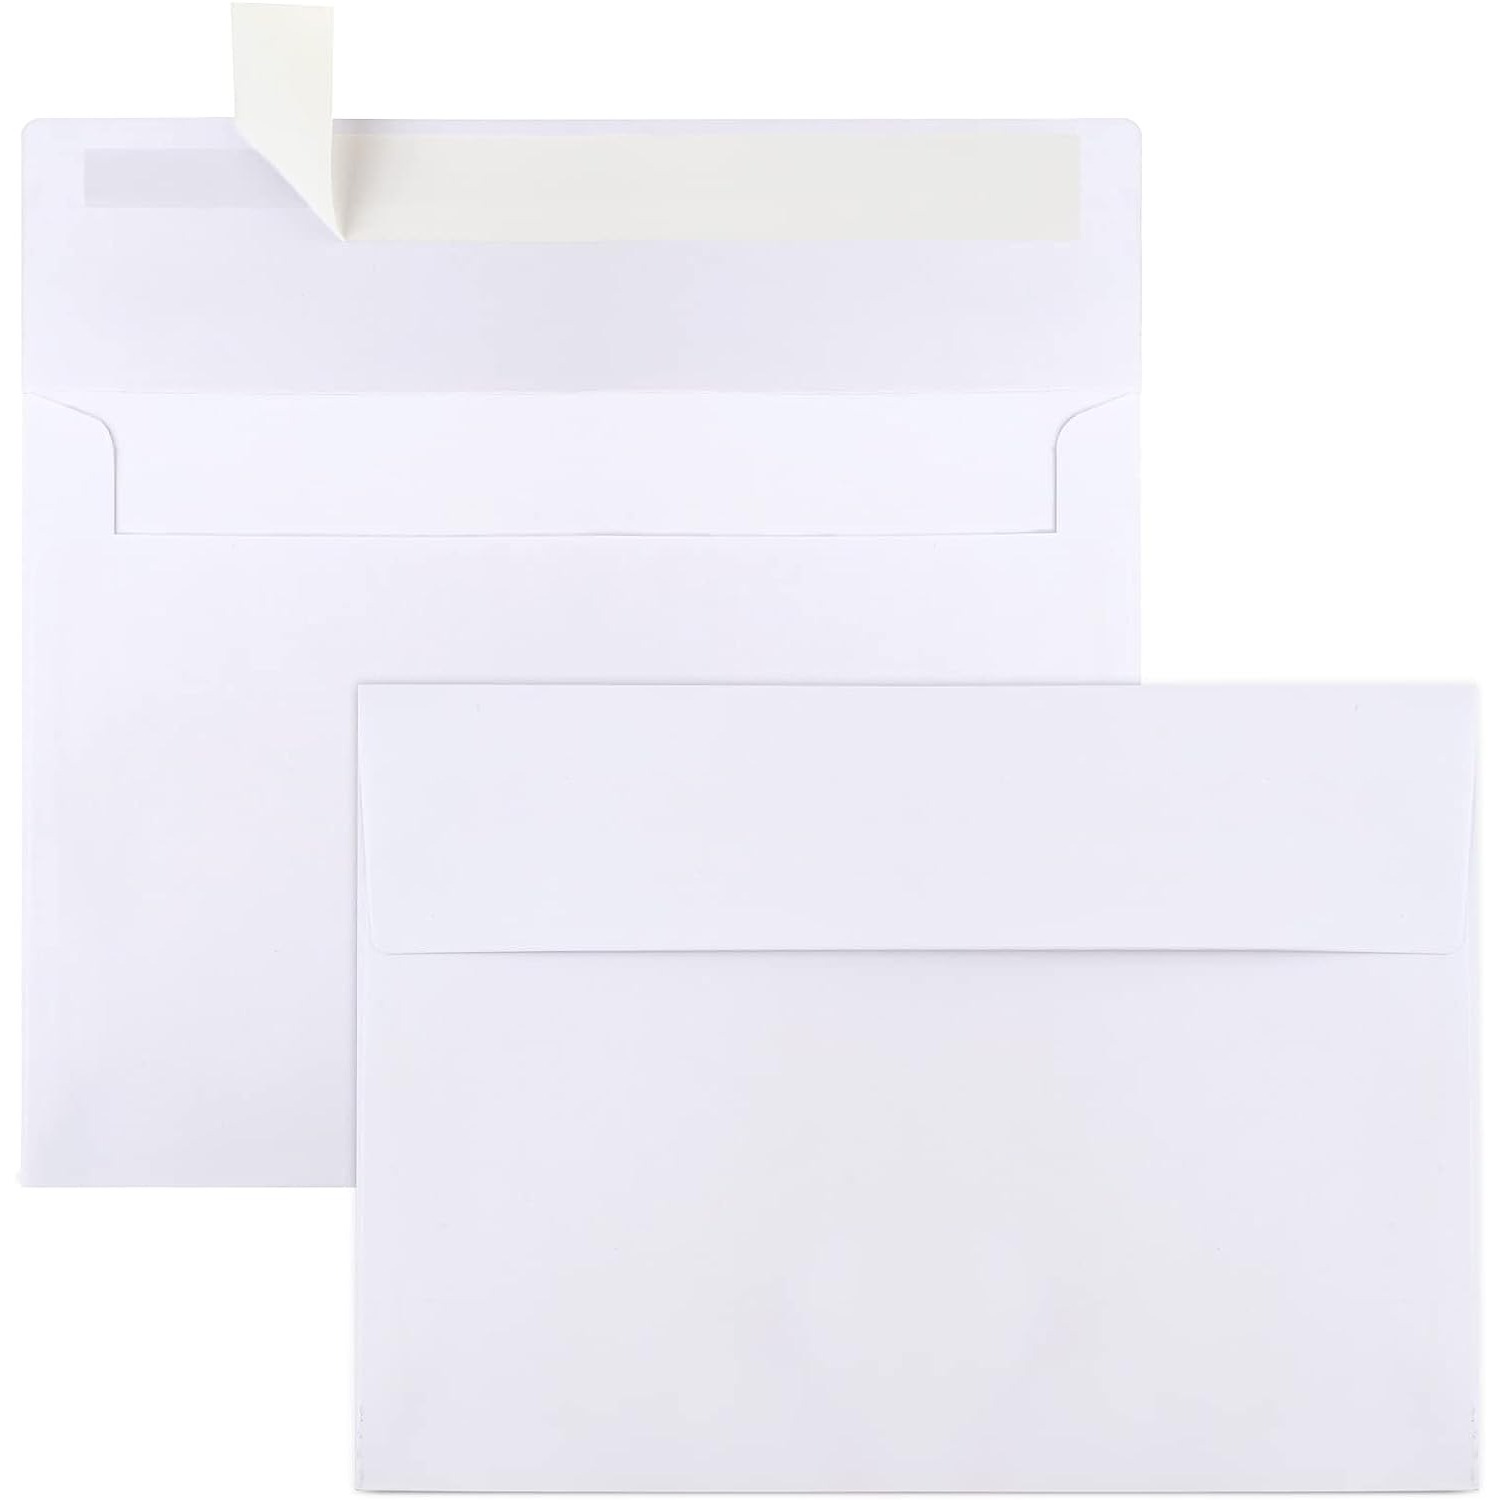 50-Pack Printable A7 Brown Envelopes for 5x7 Cards, Kraft Paper